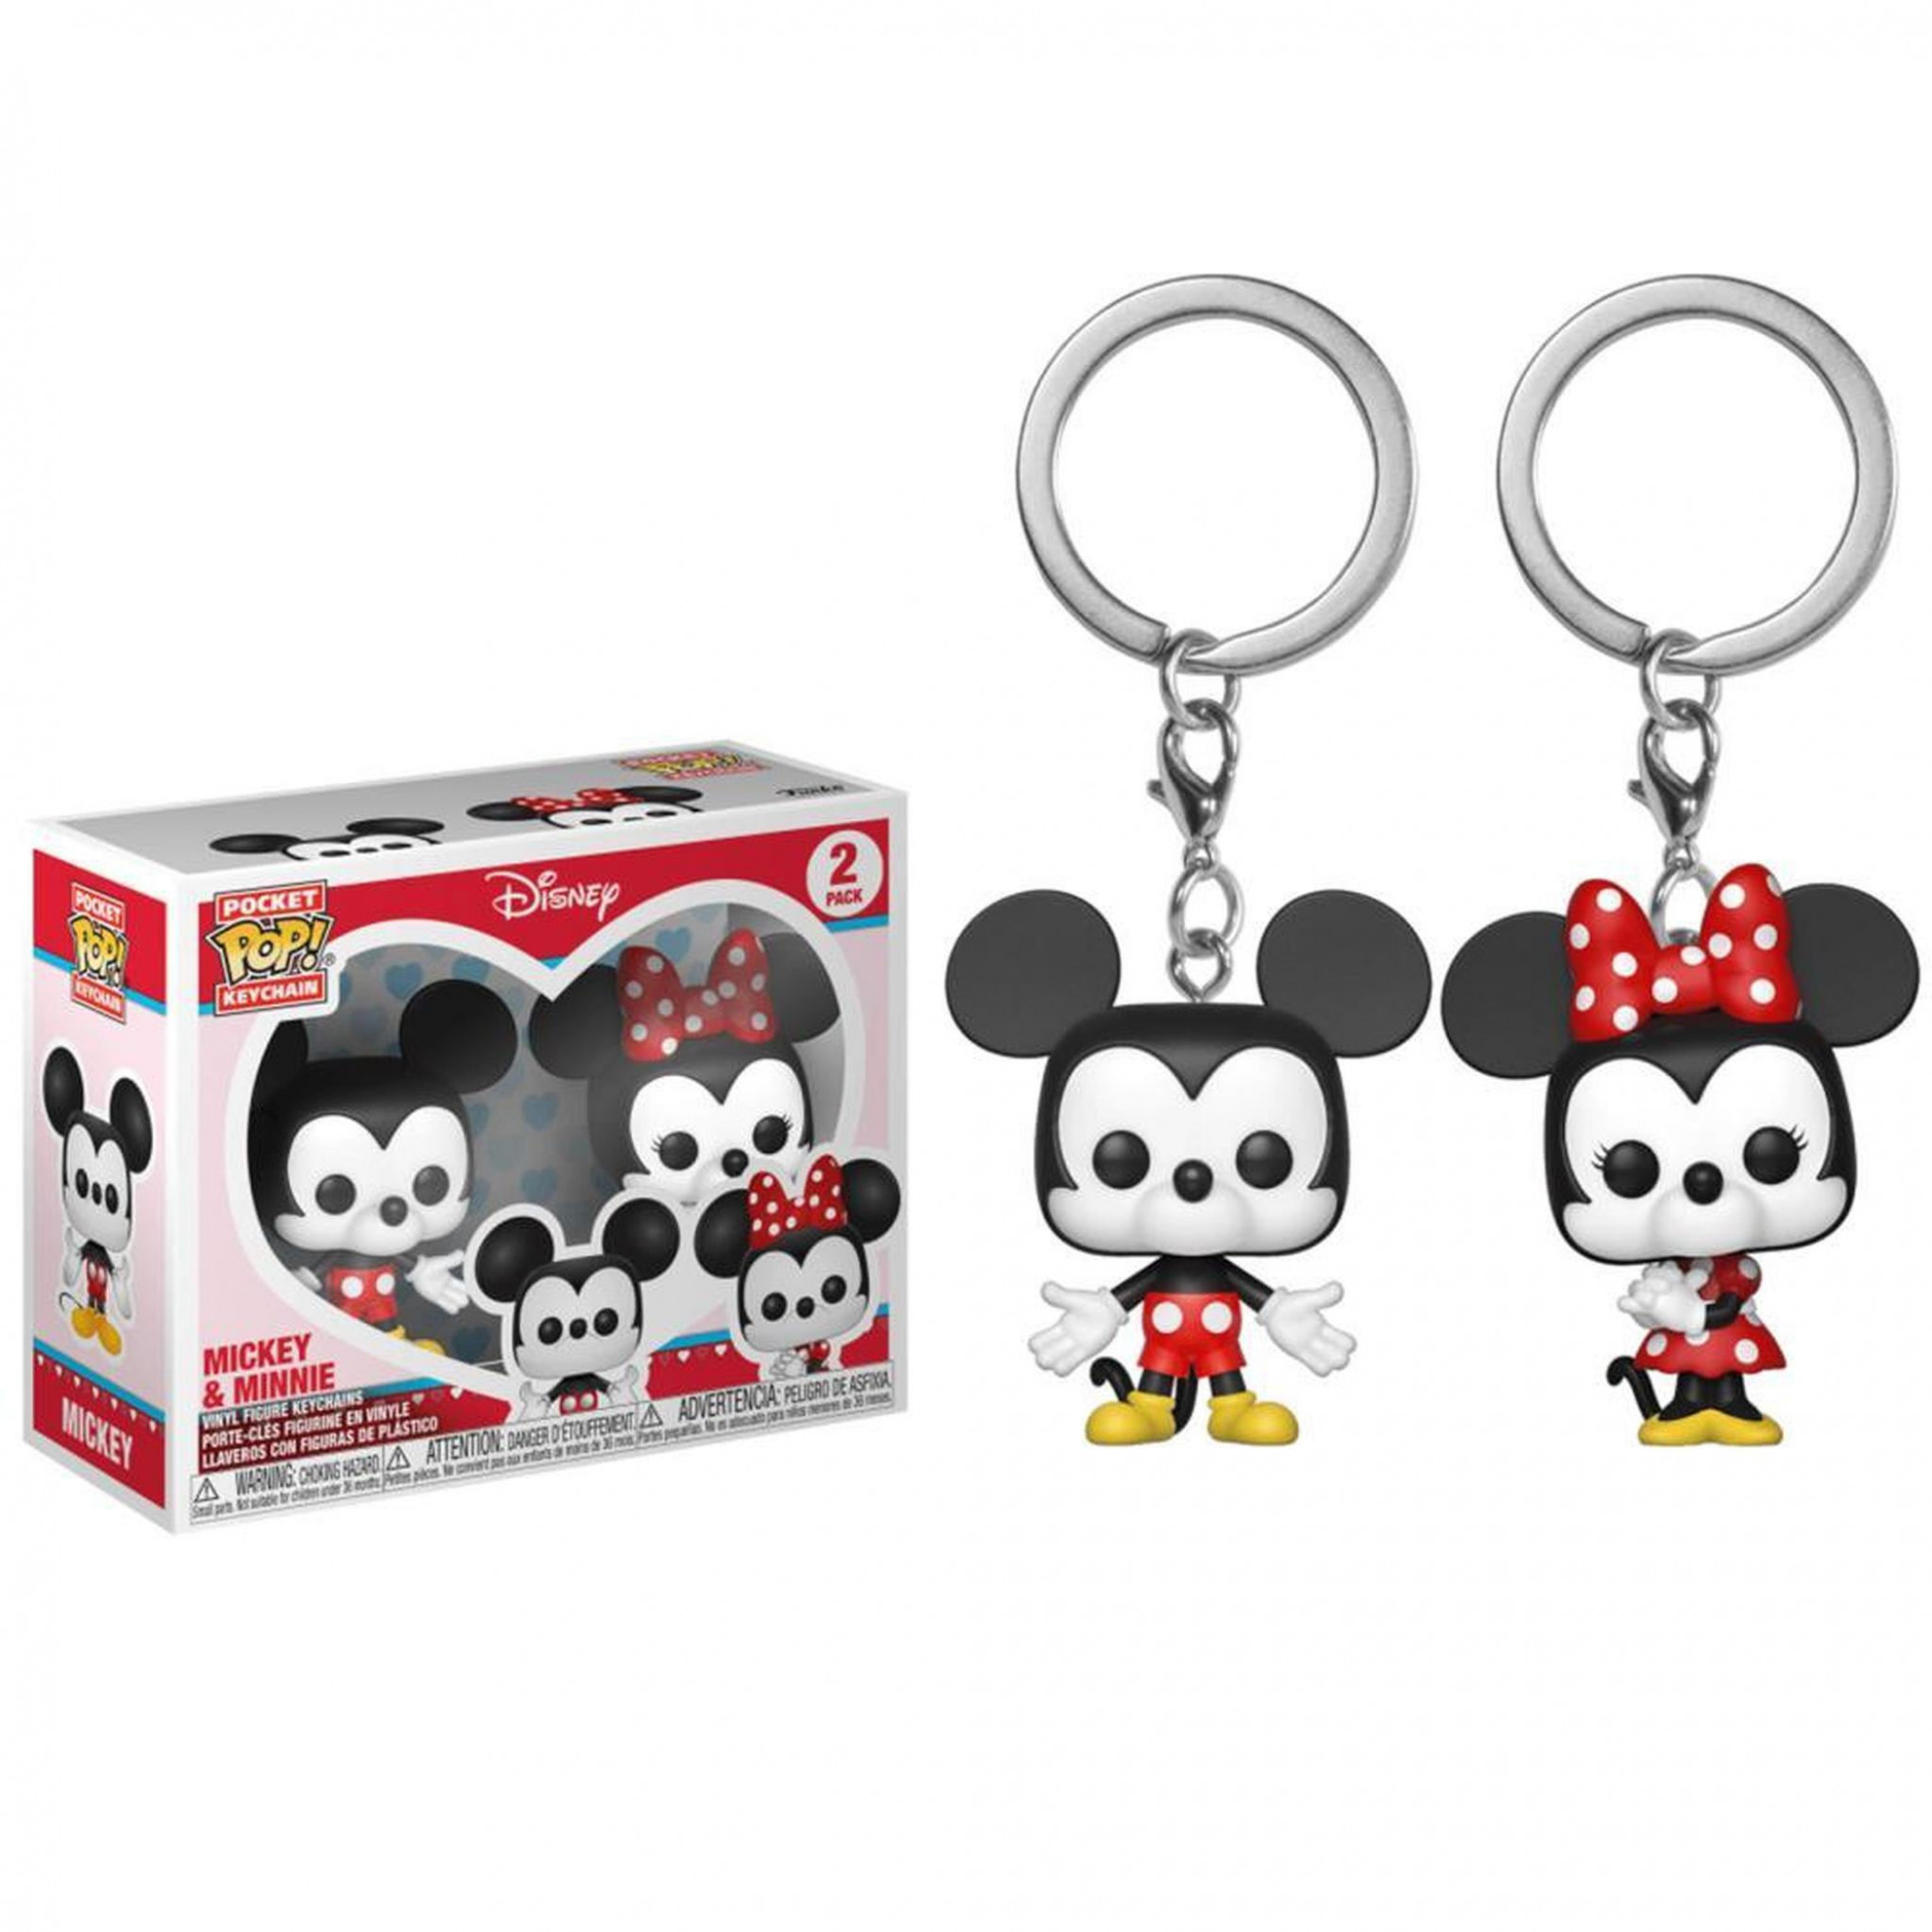 Mickey and Minne Funko Pop Pocket Keychain 2-pack